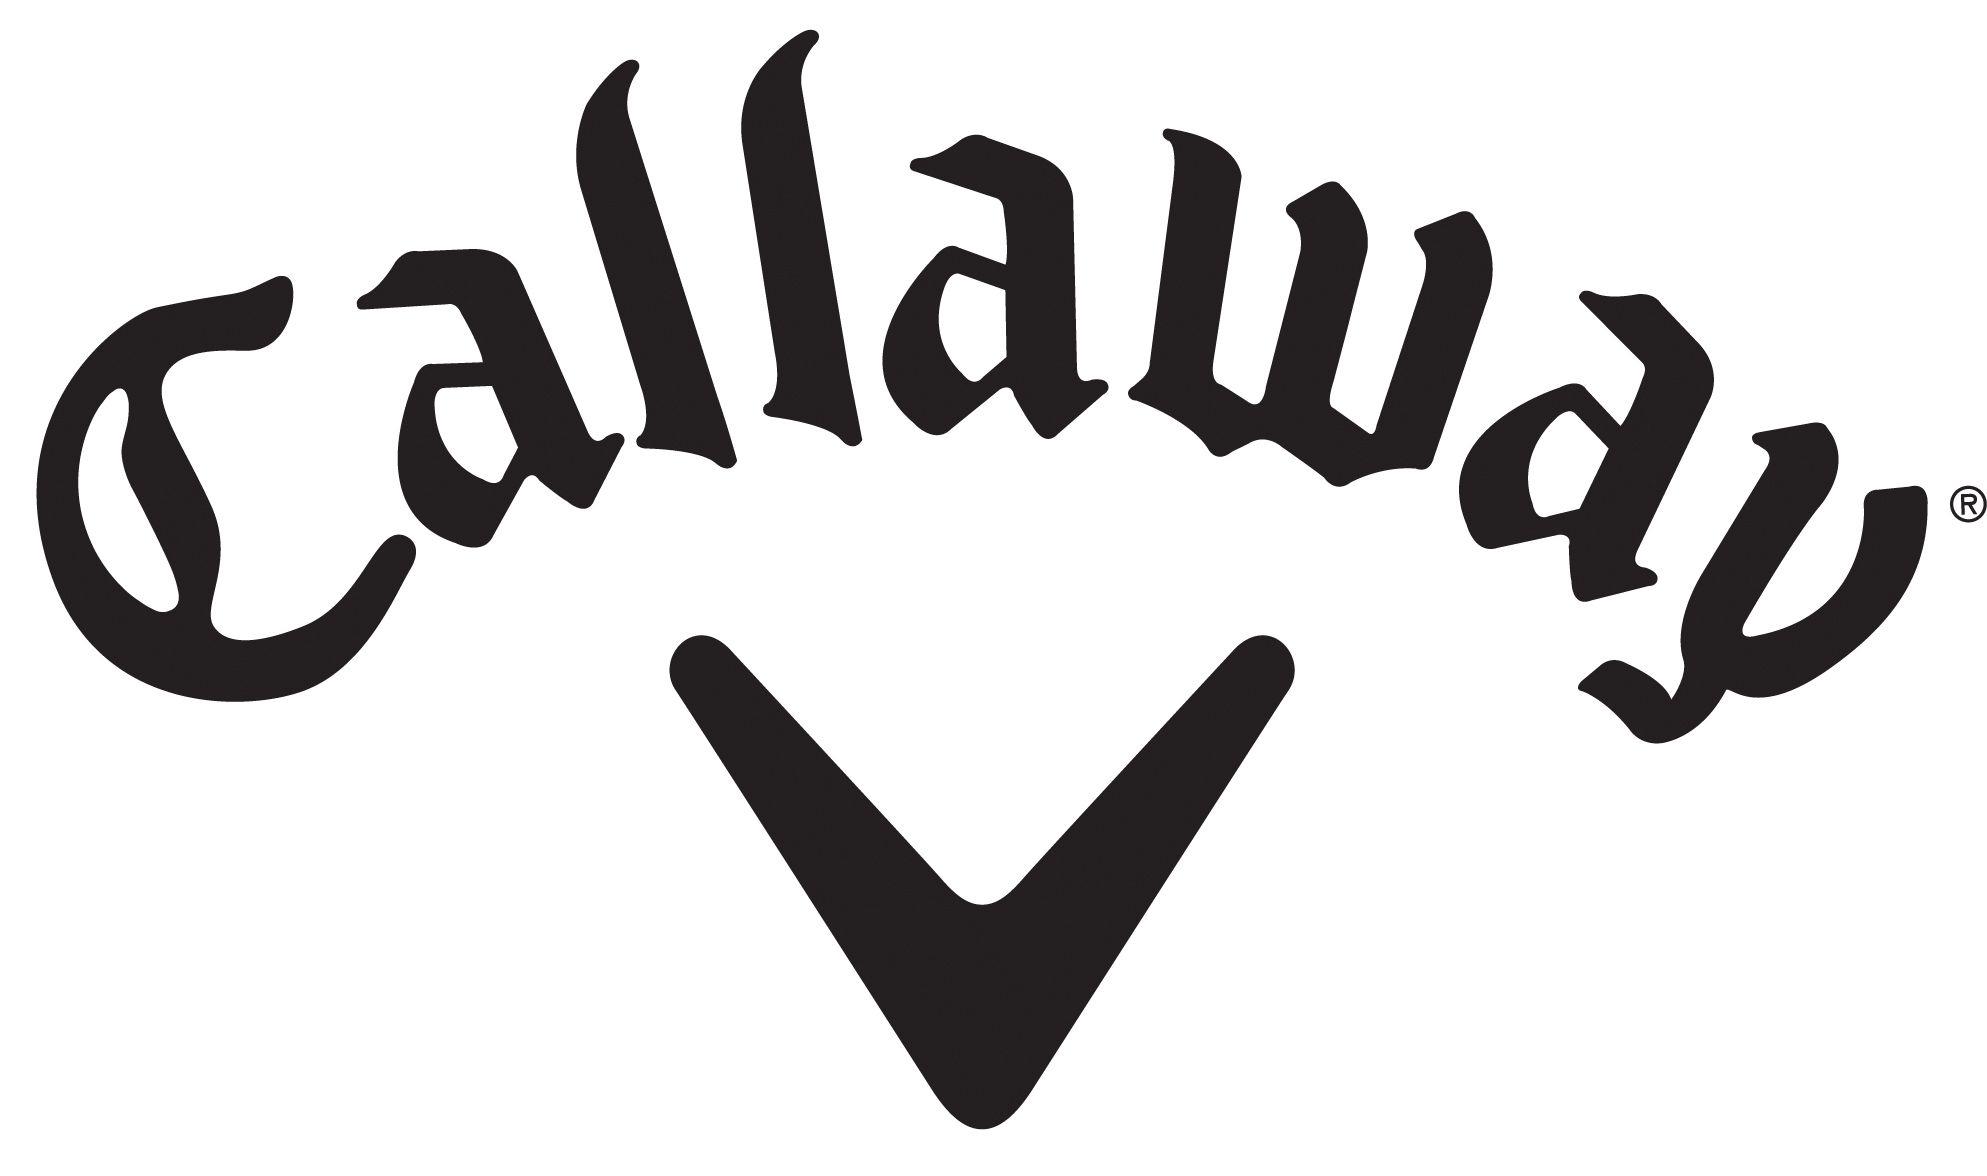 taylormade golf logo